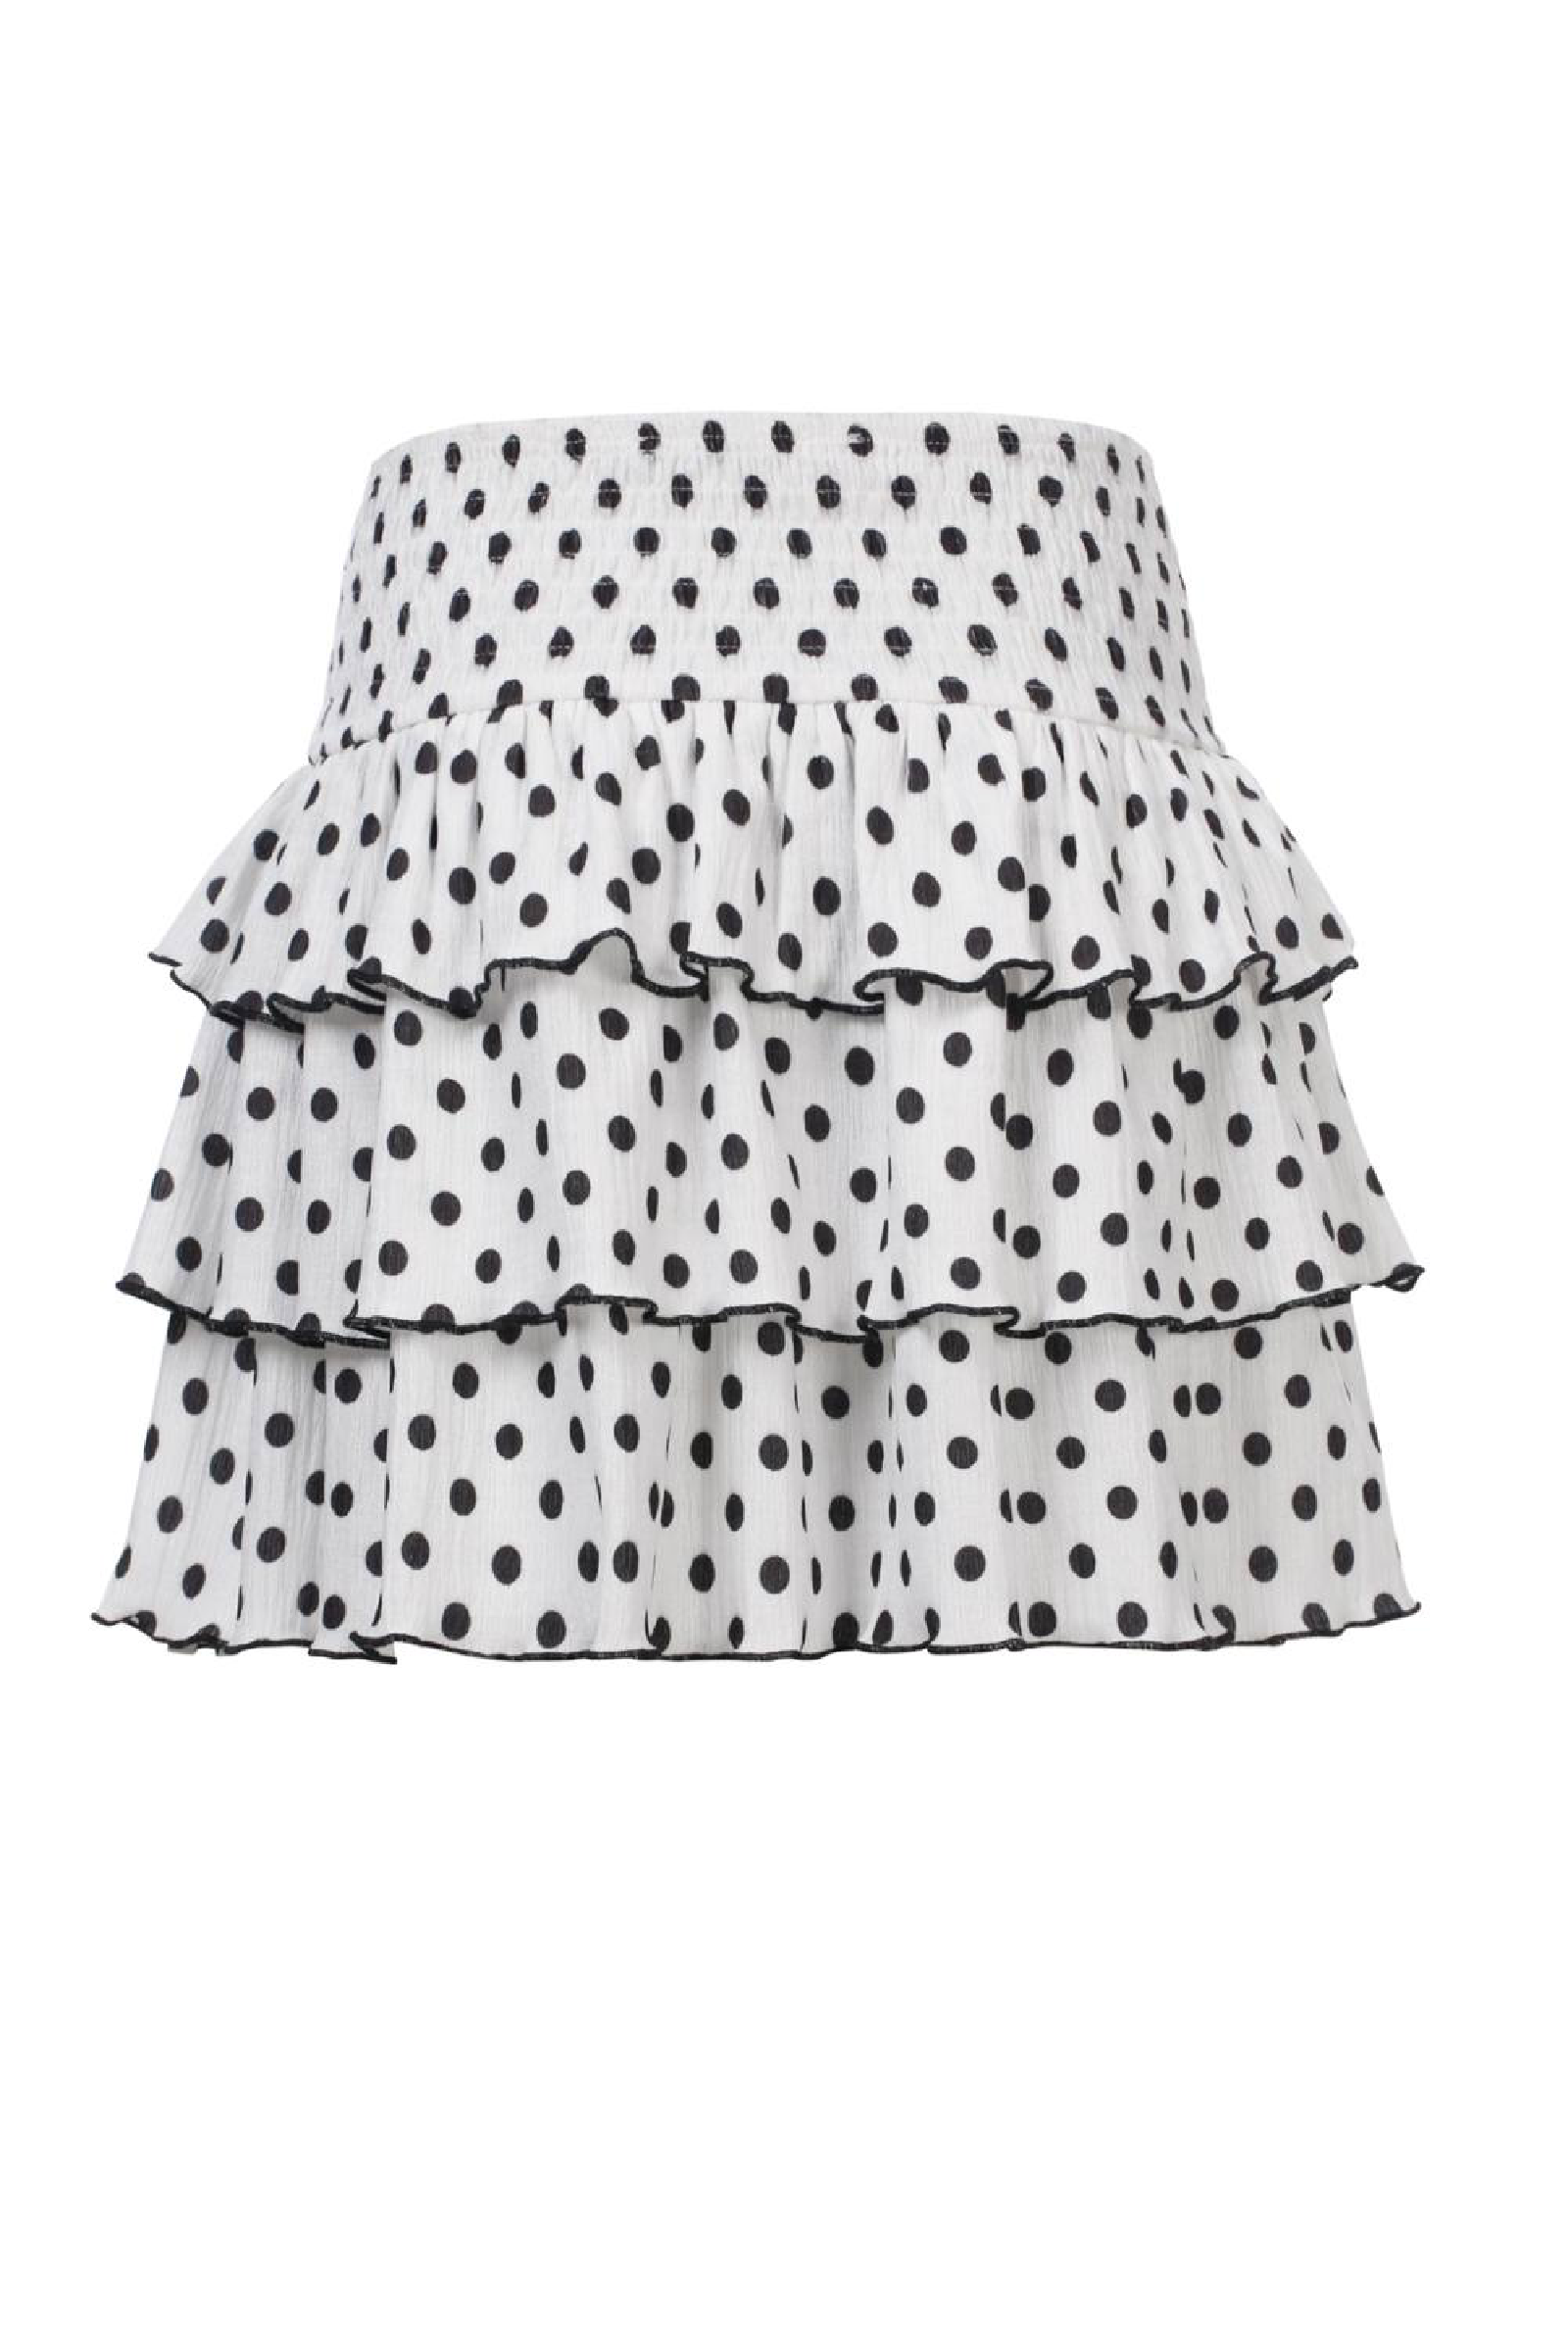 Meisjes Little 3 layered skirt dots van Little Looxs in de kleur Lace in maat 128.